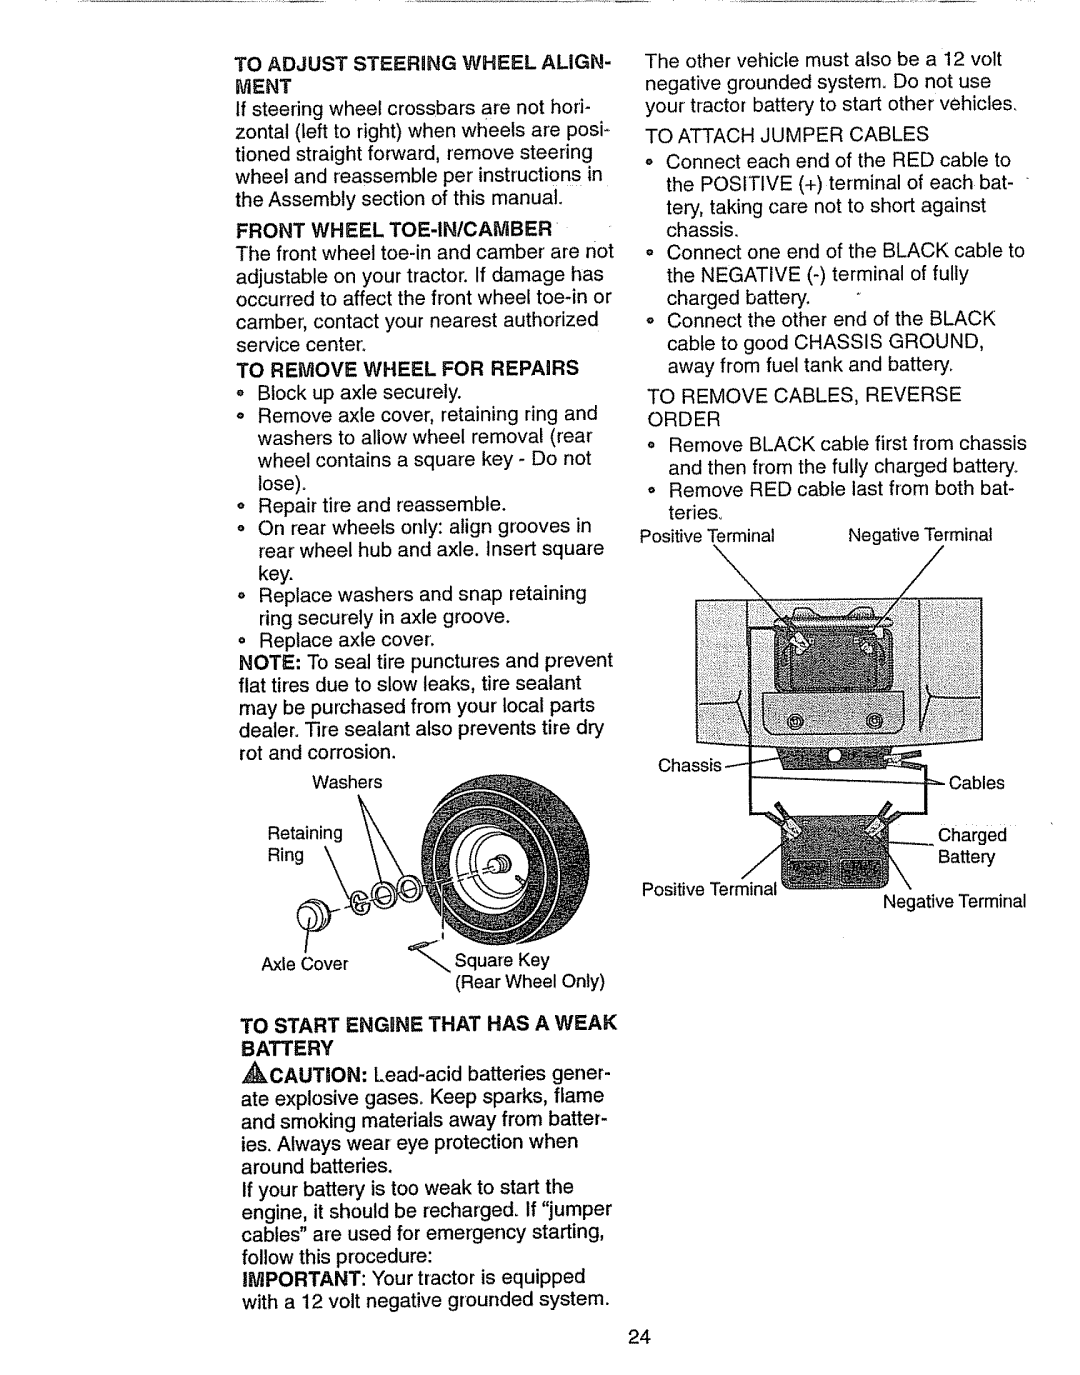 Craftsman 917.270631 owner manual To Adjust Steering Wheel Align, To Start Engine That Has A Weak Battery 